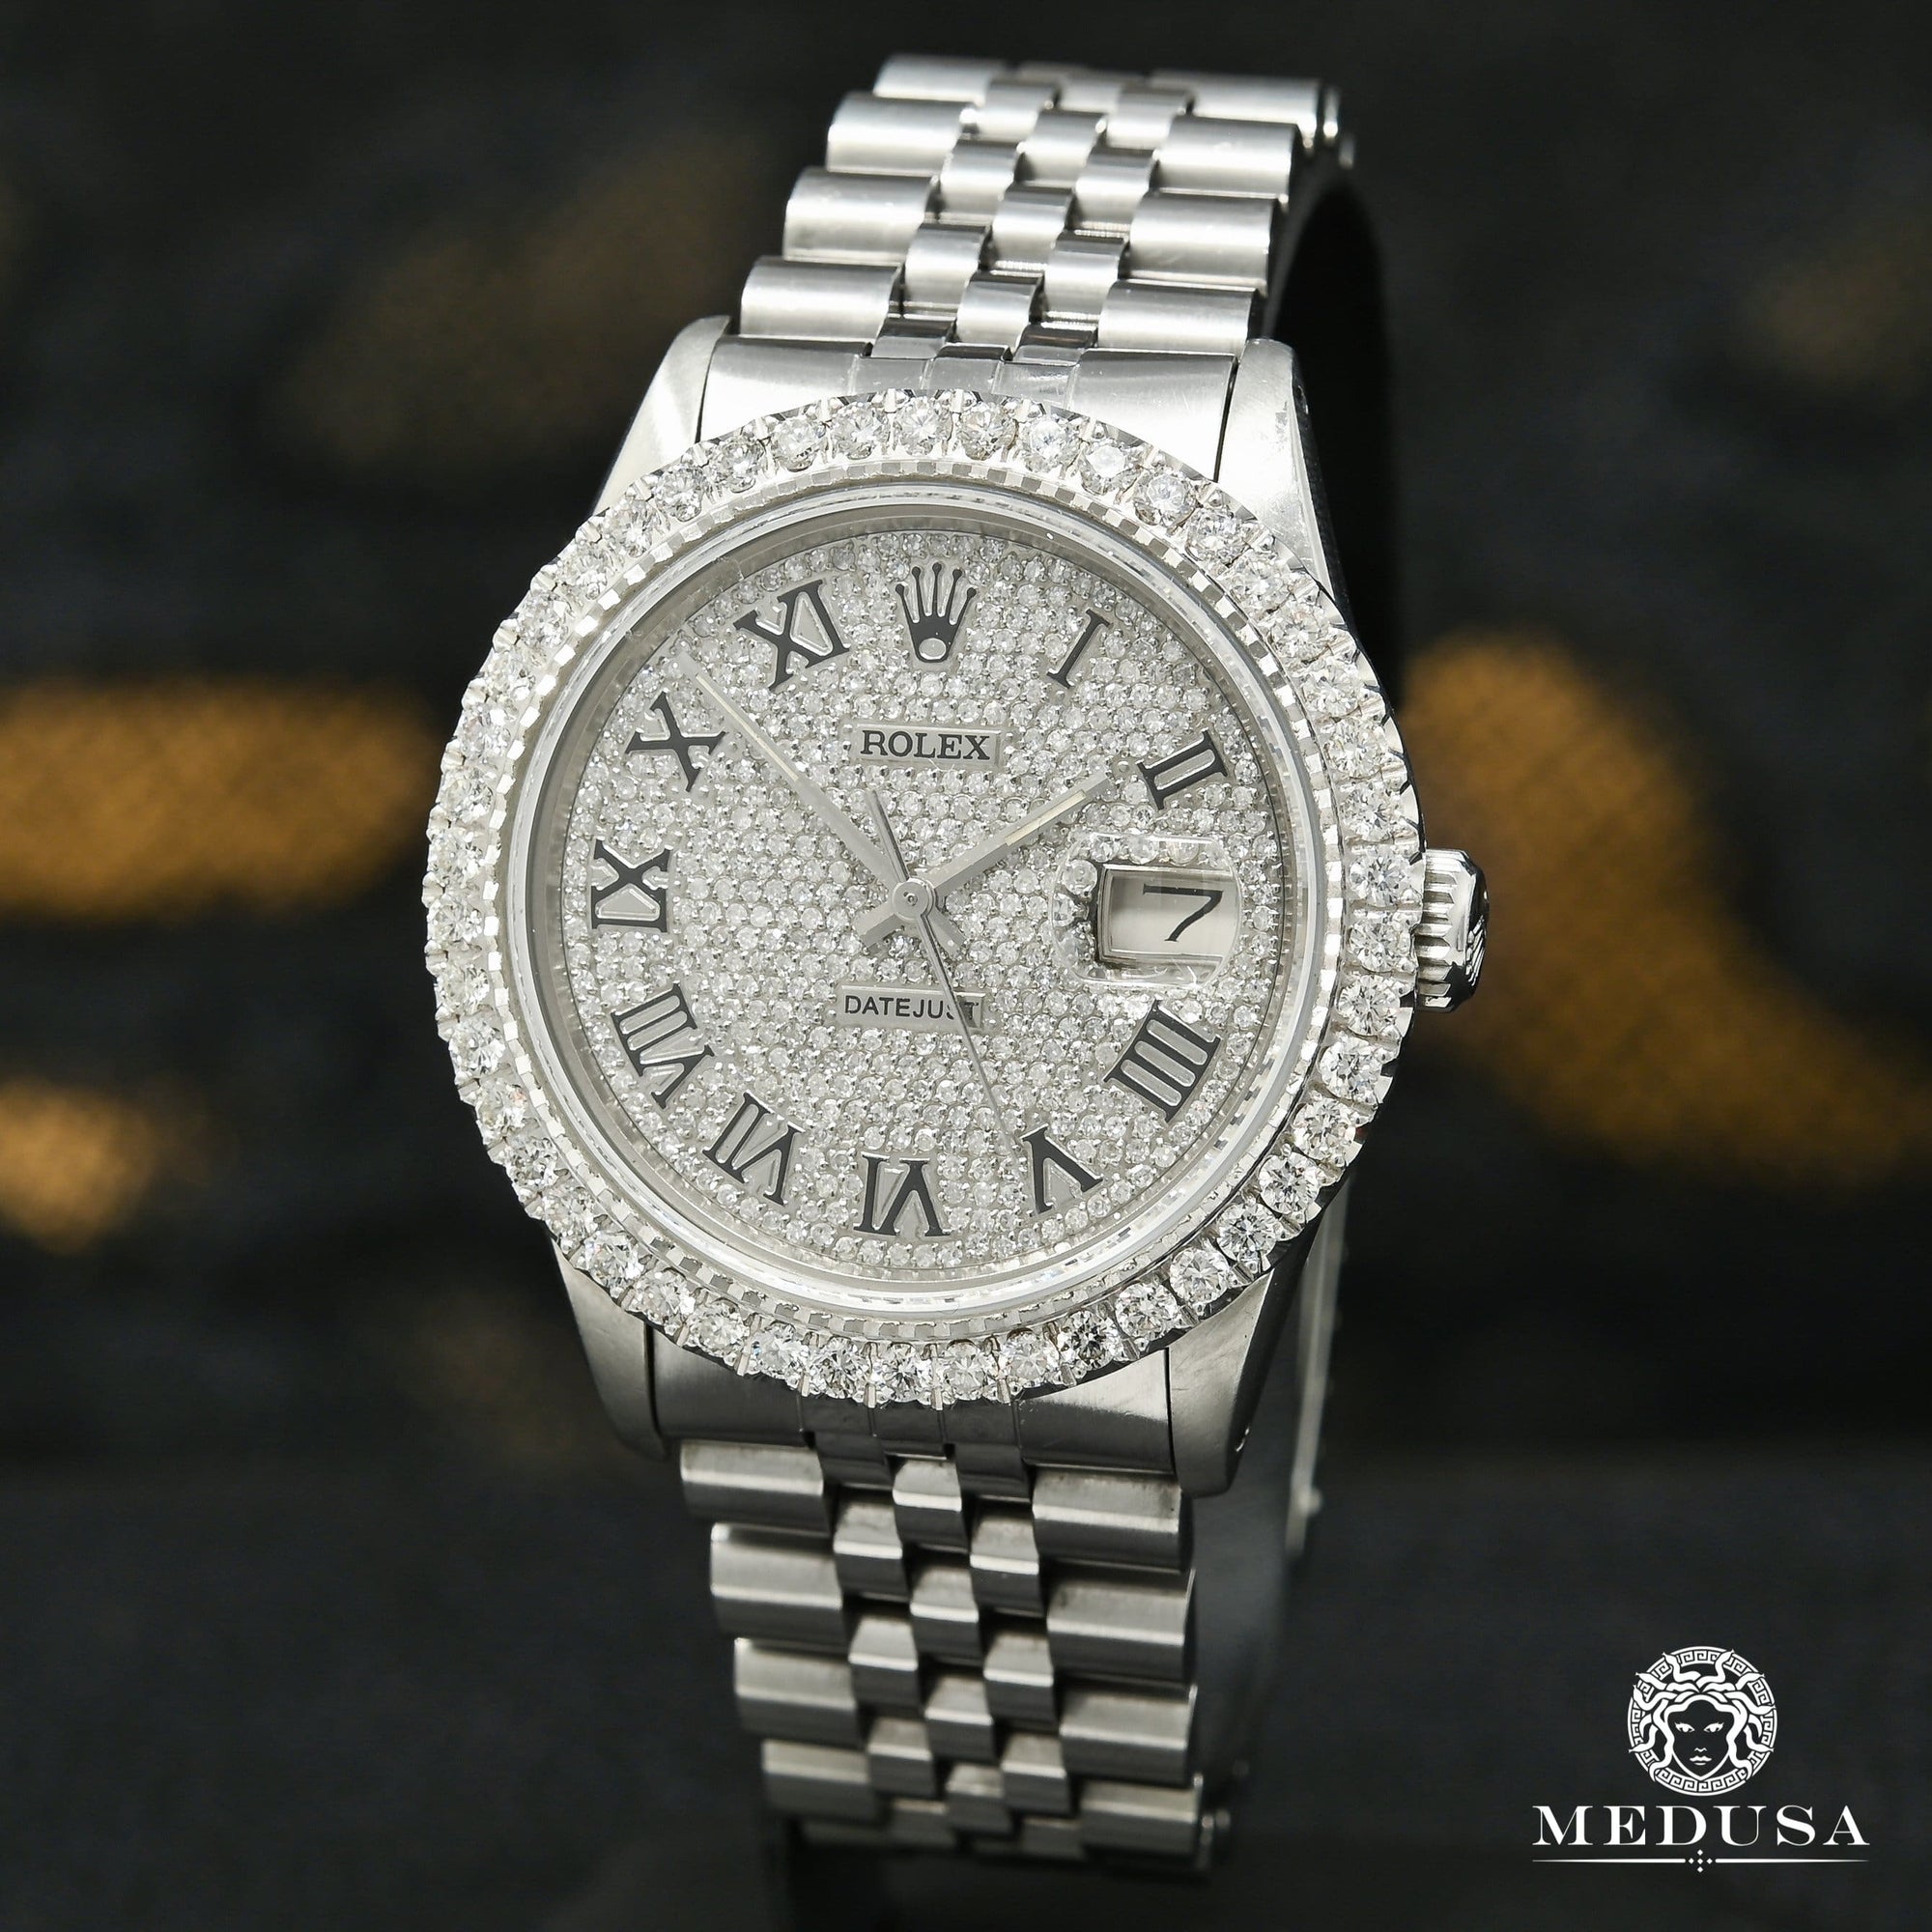 Rolex watch | Rolex Datejust Men's Watch 36mm - Iced Jubilee Stainless